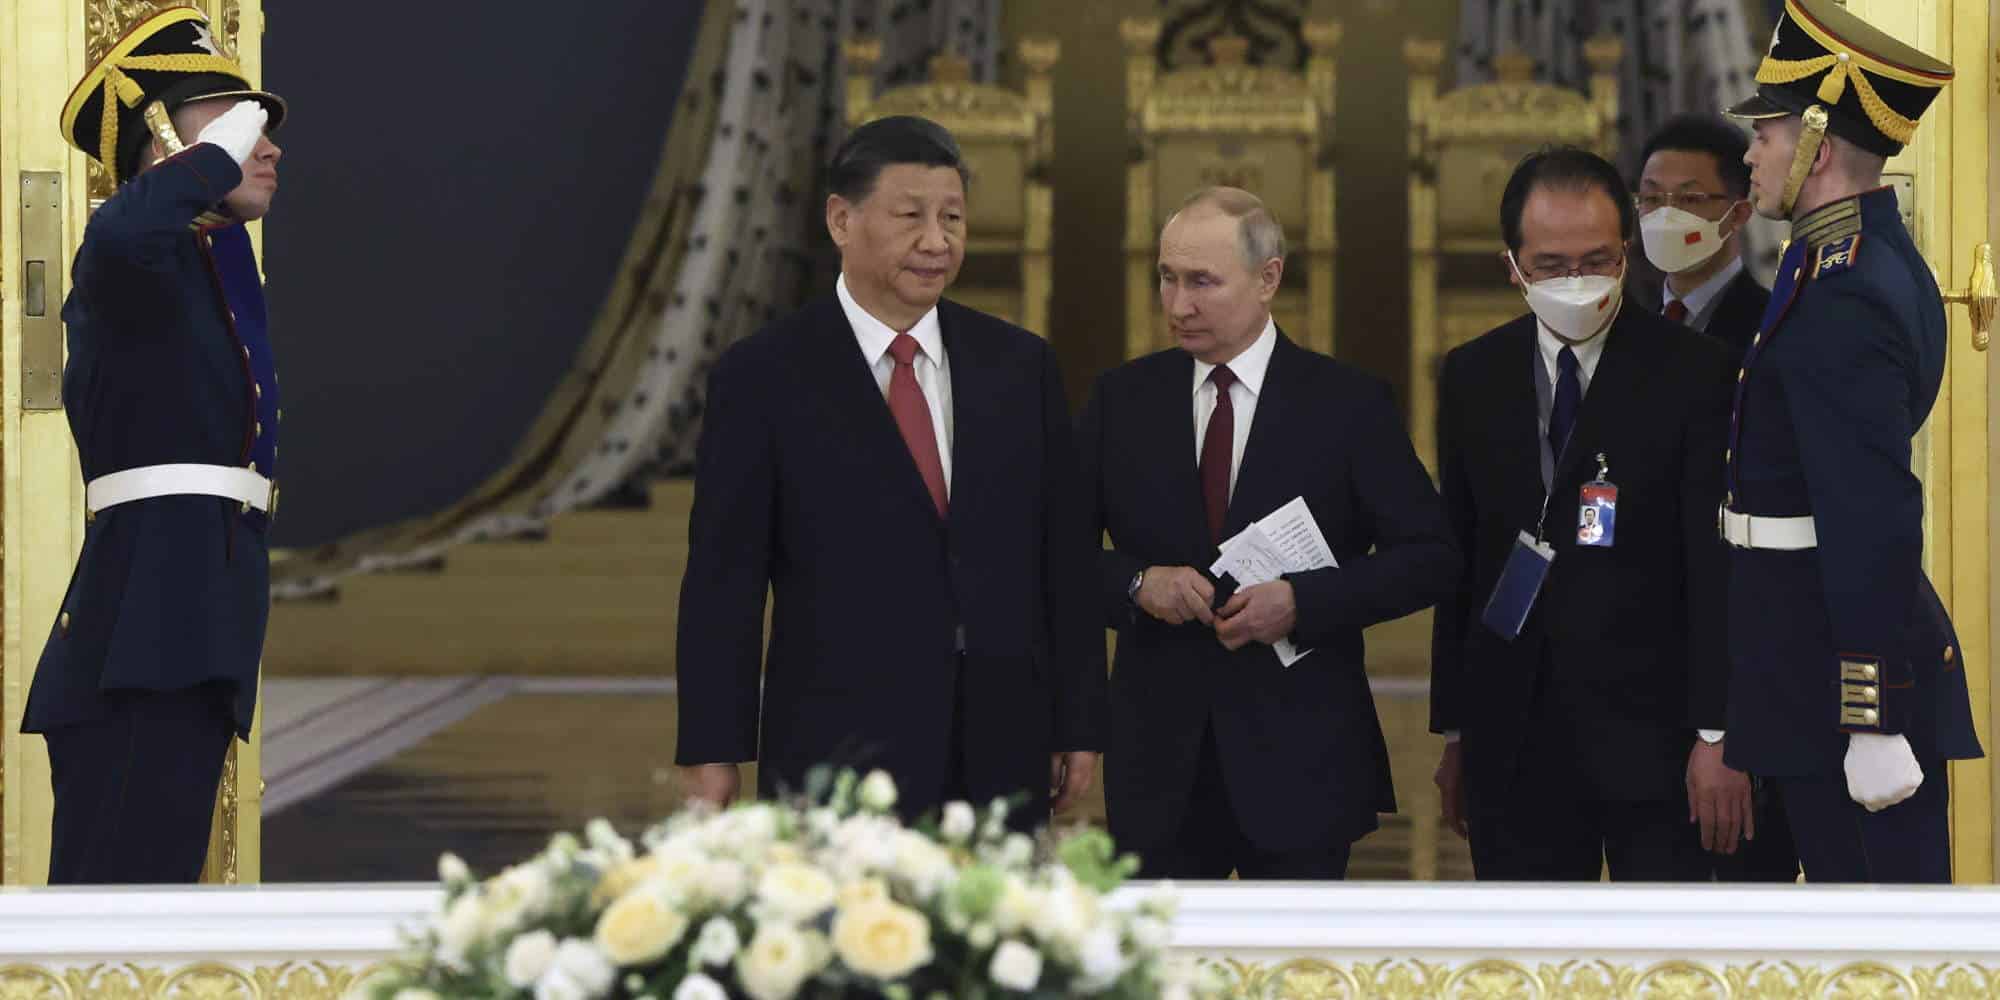 jinping putin kremlino - Ο Πούτιν προσφέρει «γη και ύδωρ» στον Σι Τζινπίνγκ - Το σχέδιο της Μόσχας να αντικαταστήσει τις δυτικές επιχειρήσεις με κινεζικές